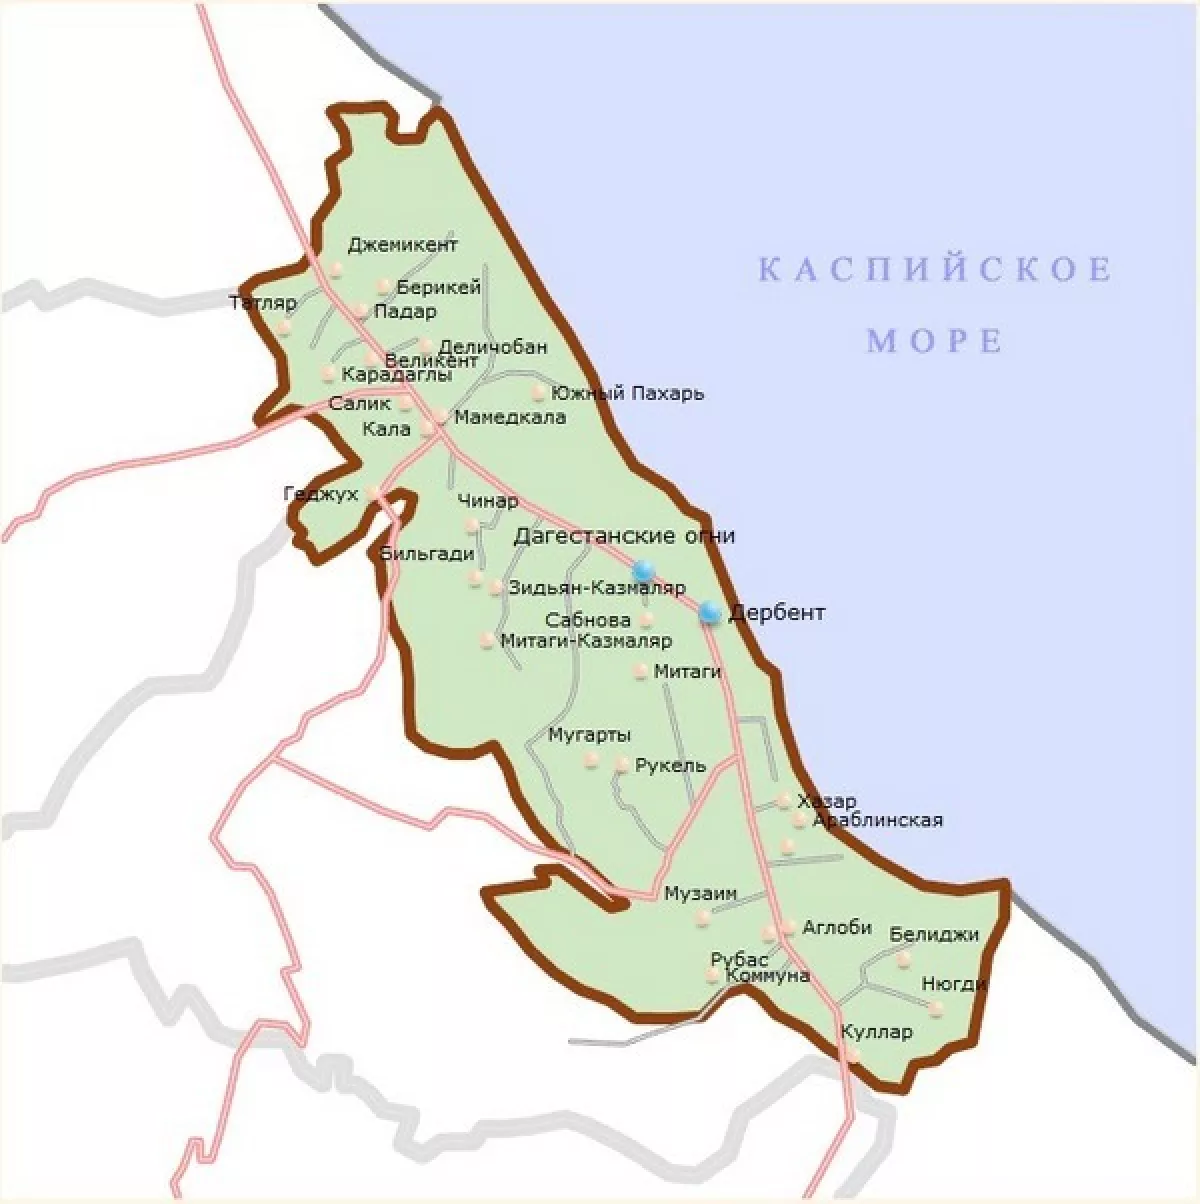 Дербентский район на карте Дагестана